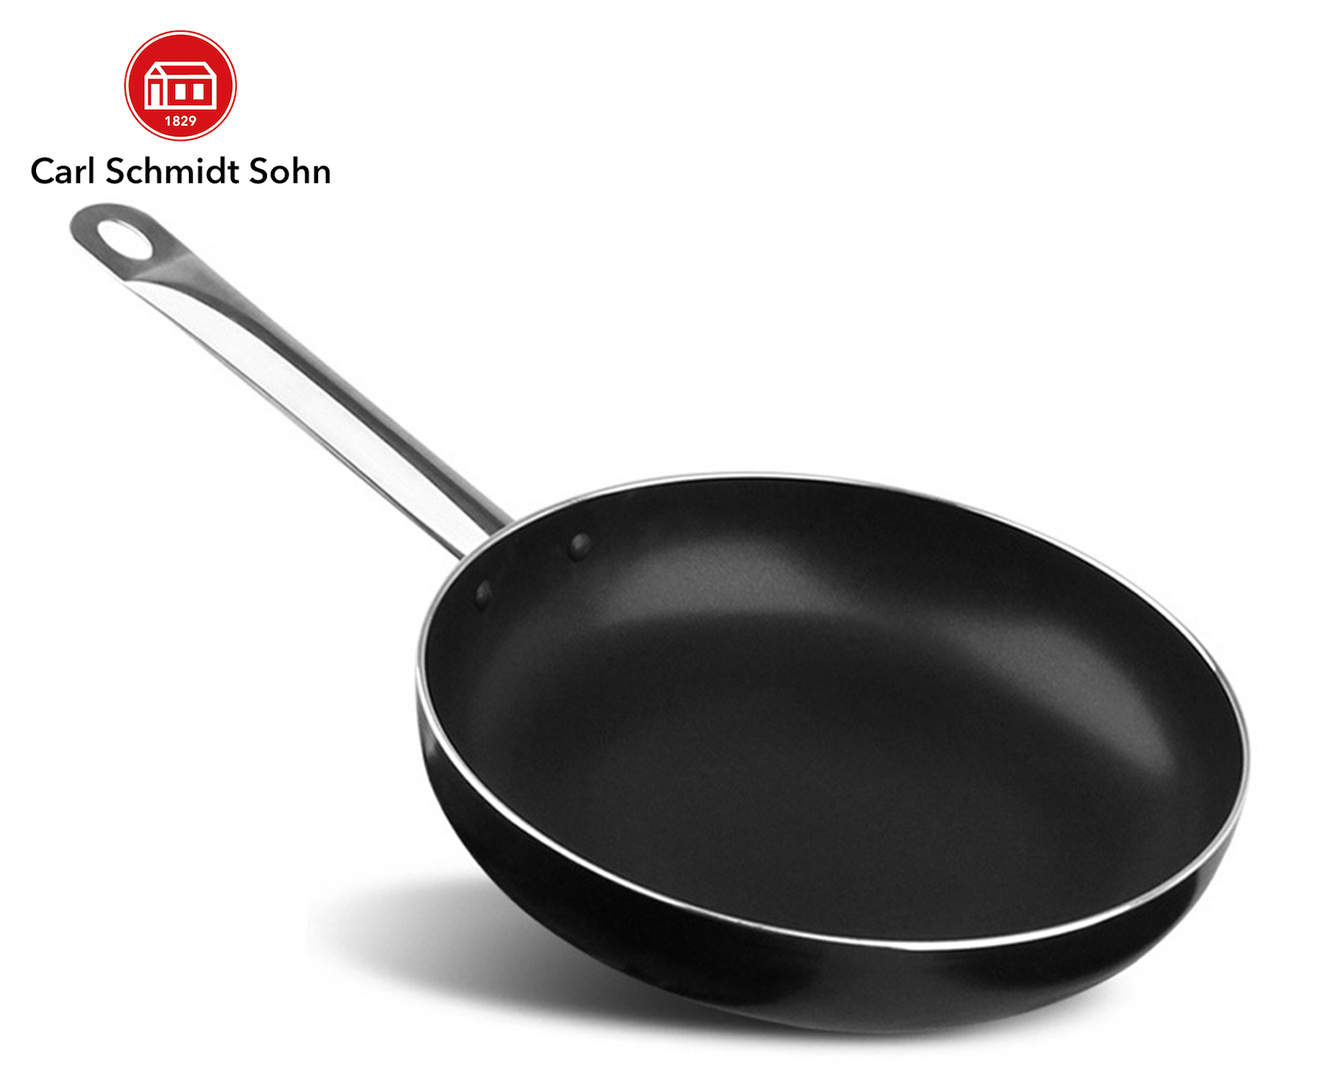 Carl 28cm Sohn Schmidt Fry Pro Solaris Pan Non-Stick